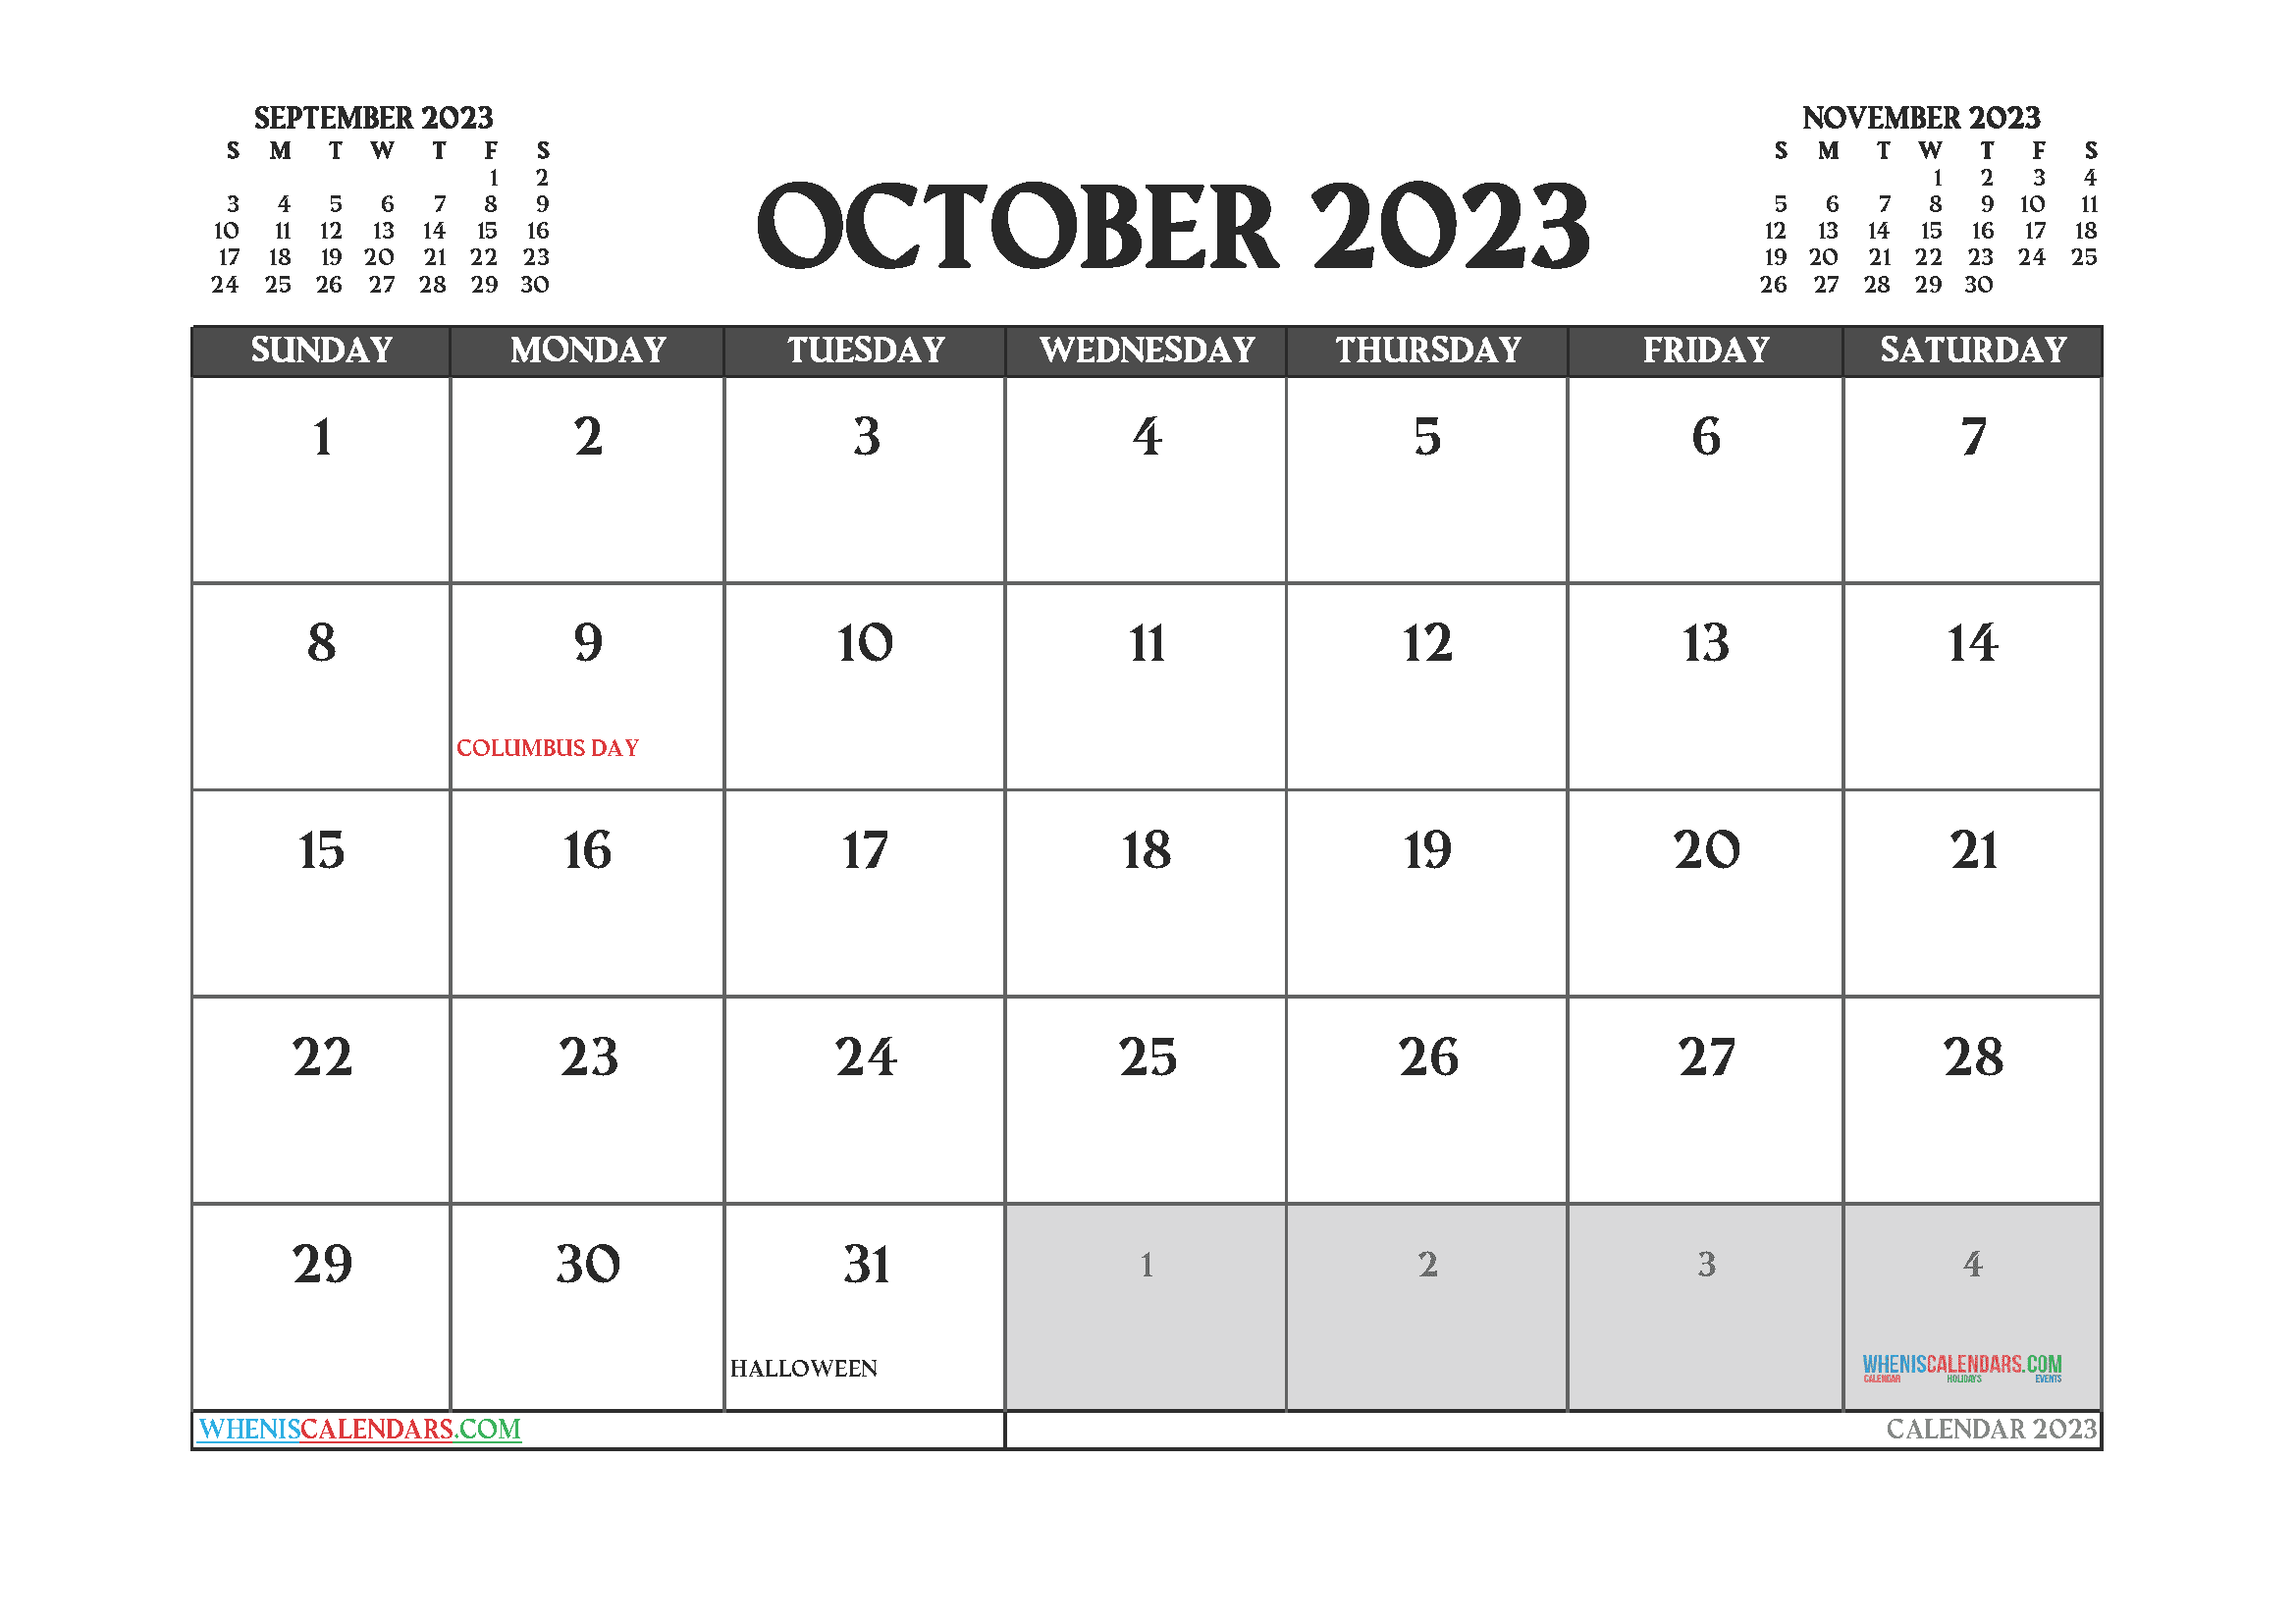 October 2023 Printable Calendar Free